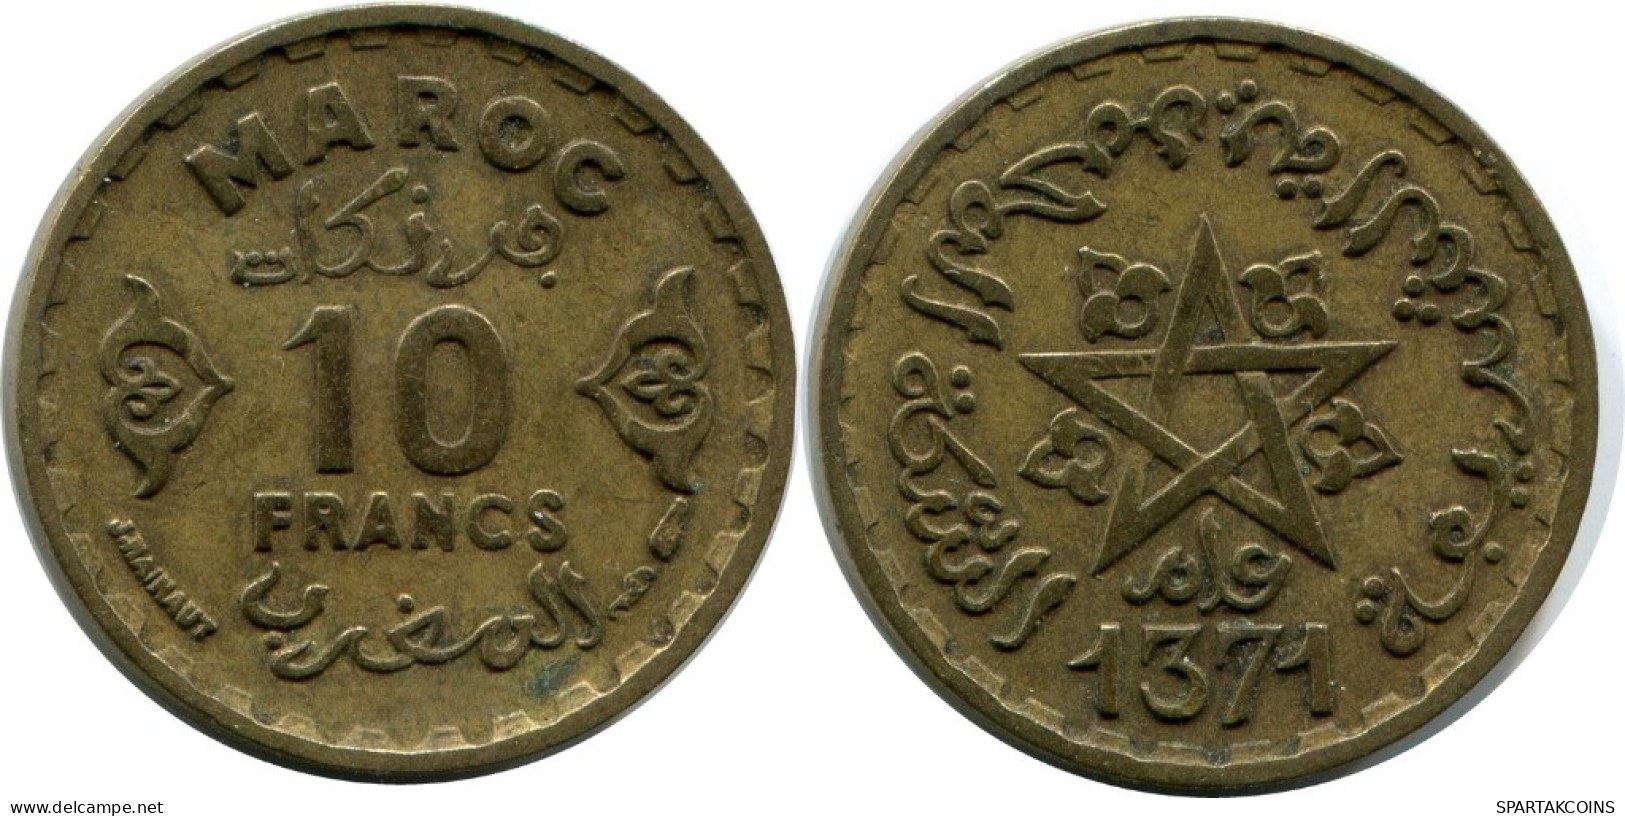 10 FRANCS 1951 MOROCCO Islamic Coin #AH677.3.U.A - Maroc